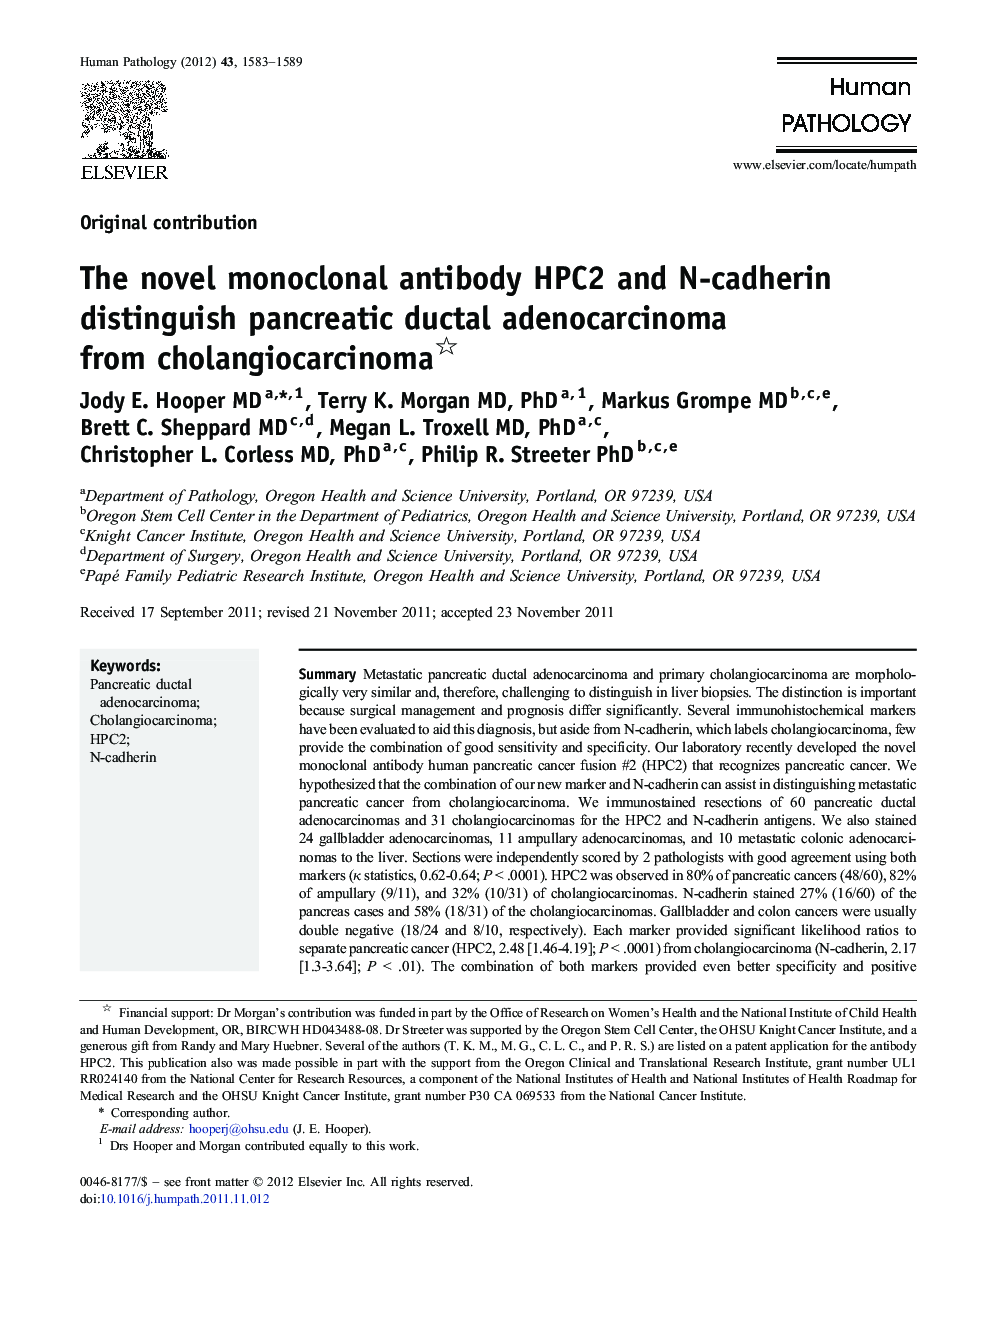 The novel monoclonal antibody HPC2 and N-cadherin distinguish pancreatic ductal adenocarcinoma from cholangiocarcinoma 